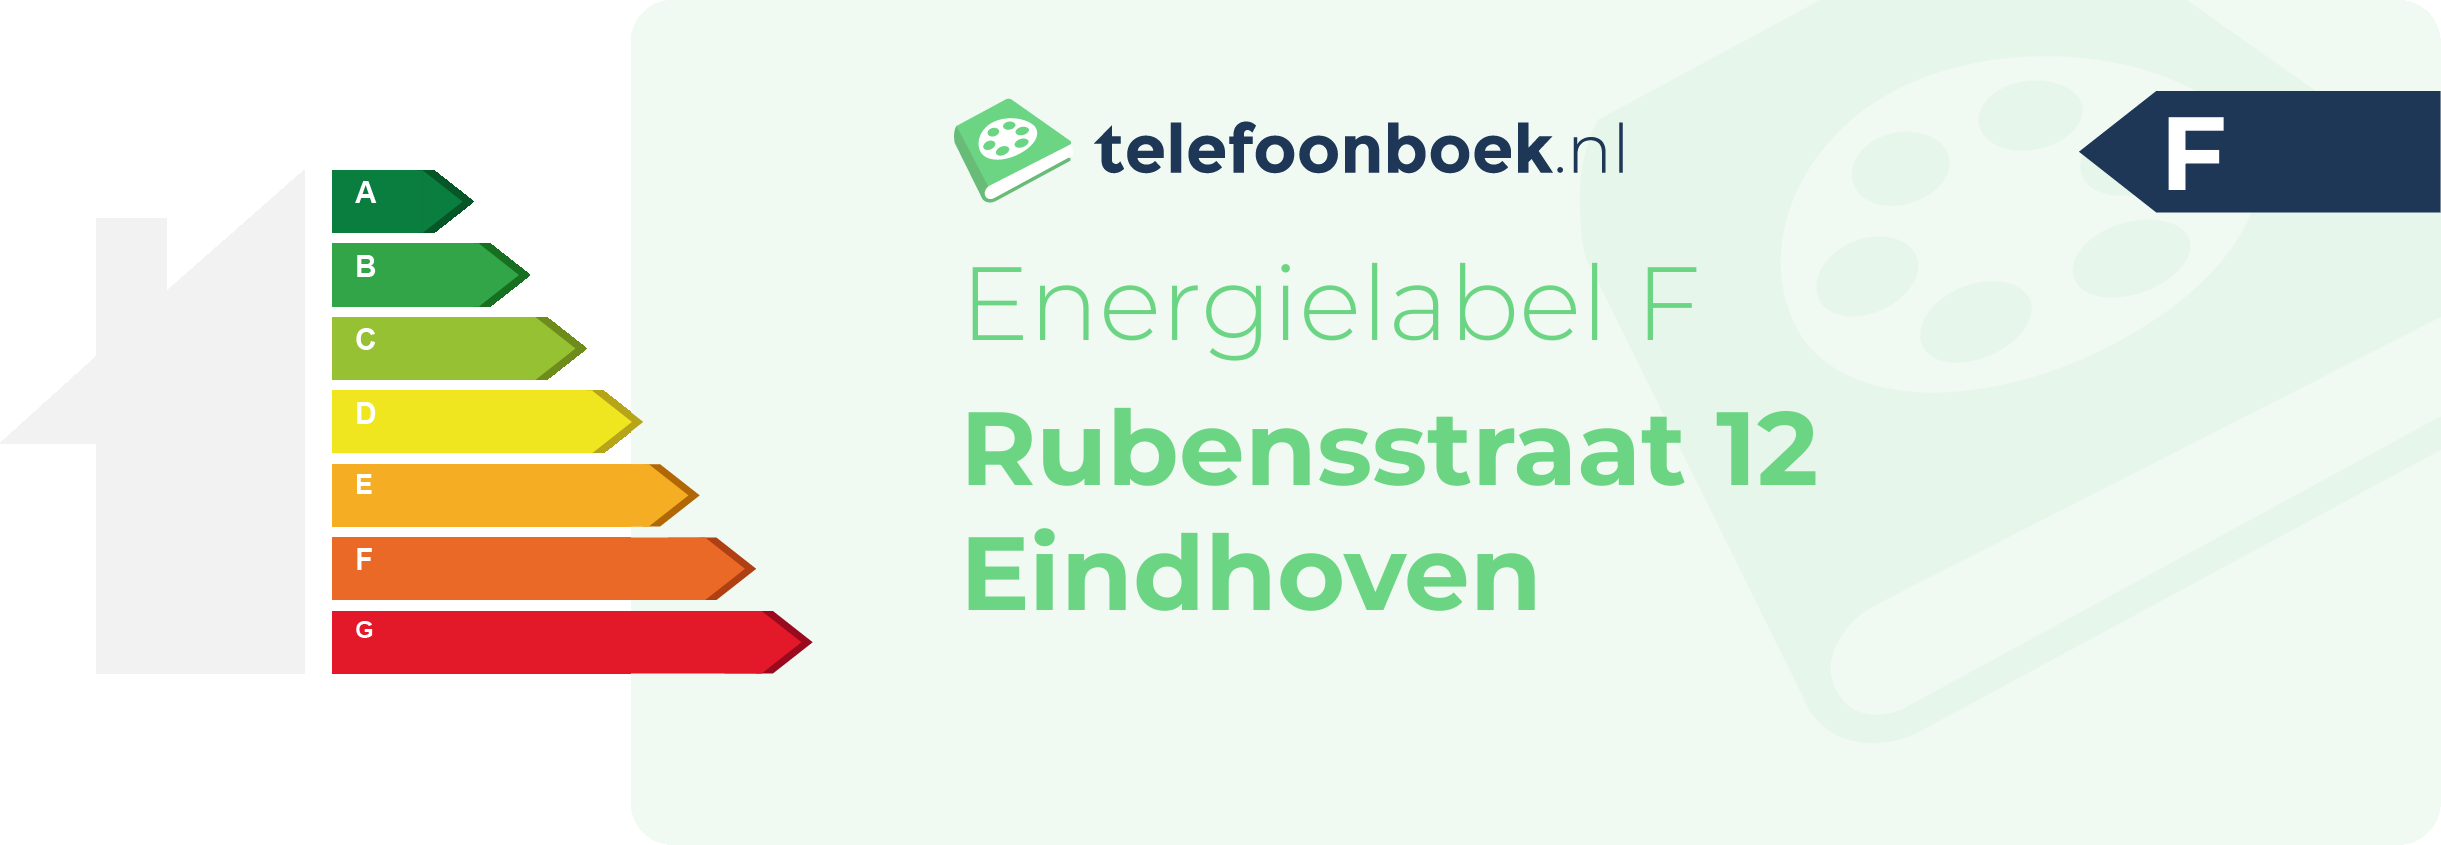 Energielabel Rubensstraat 12 Eindhoven